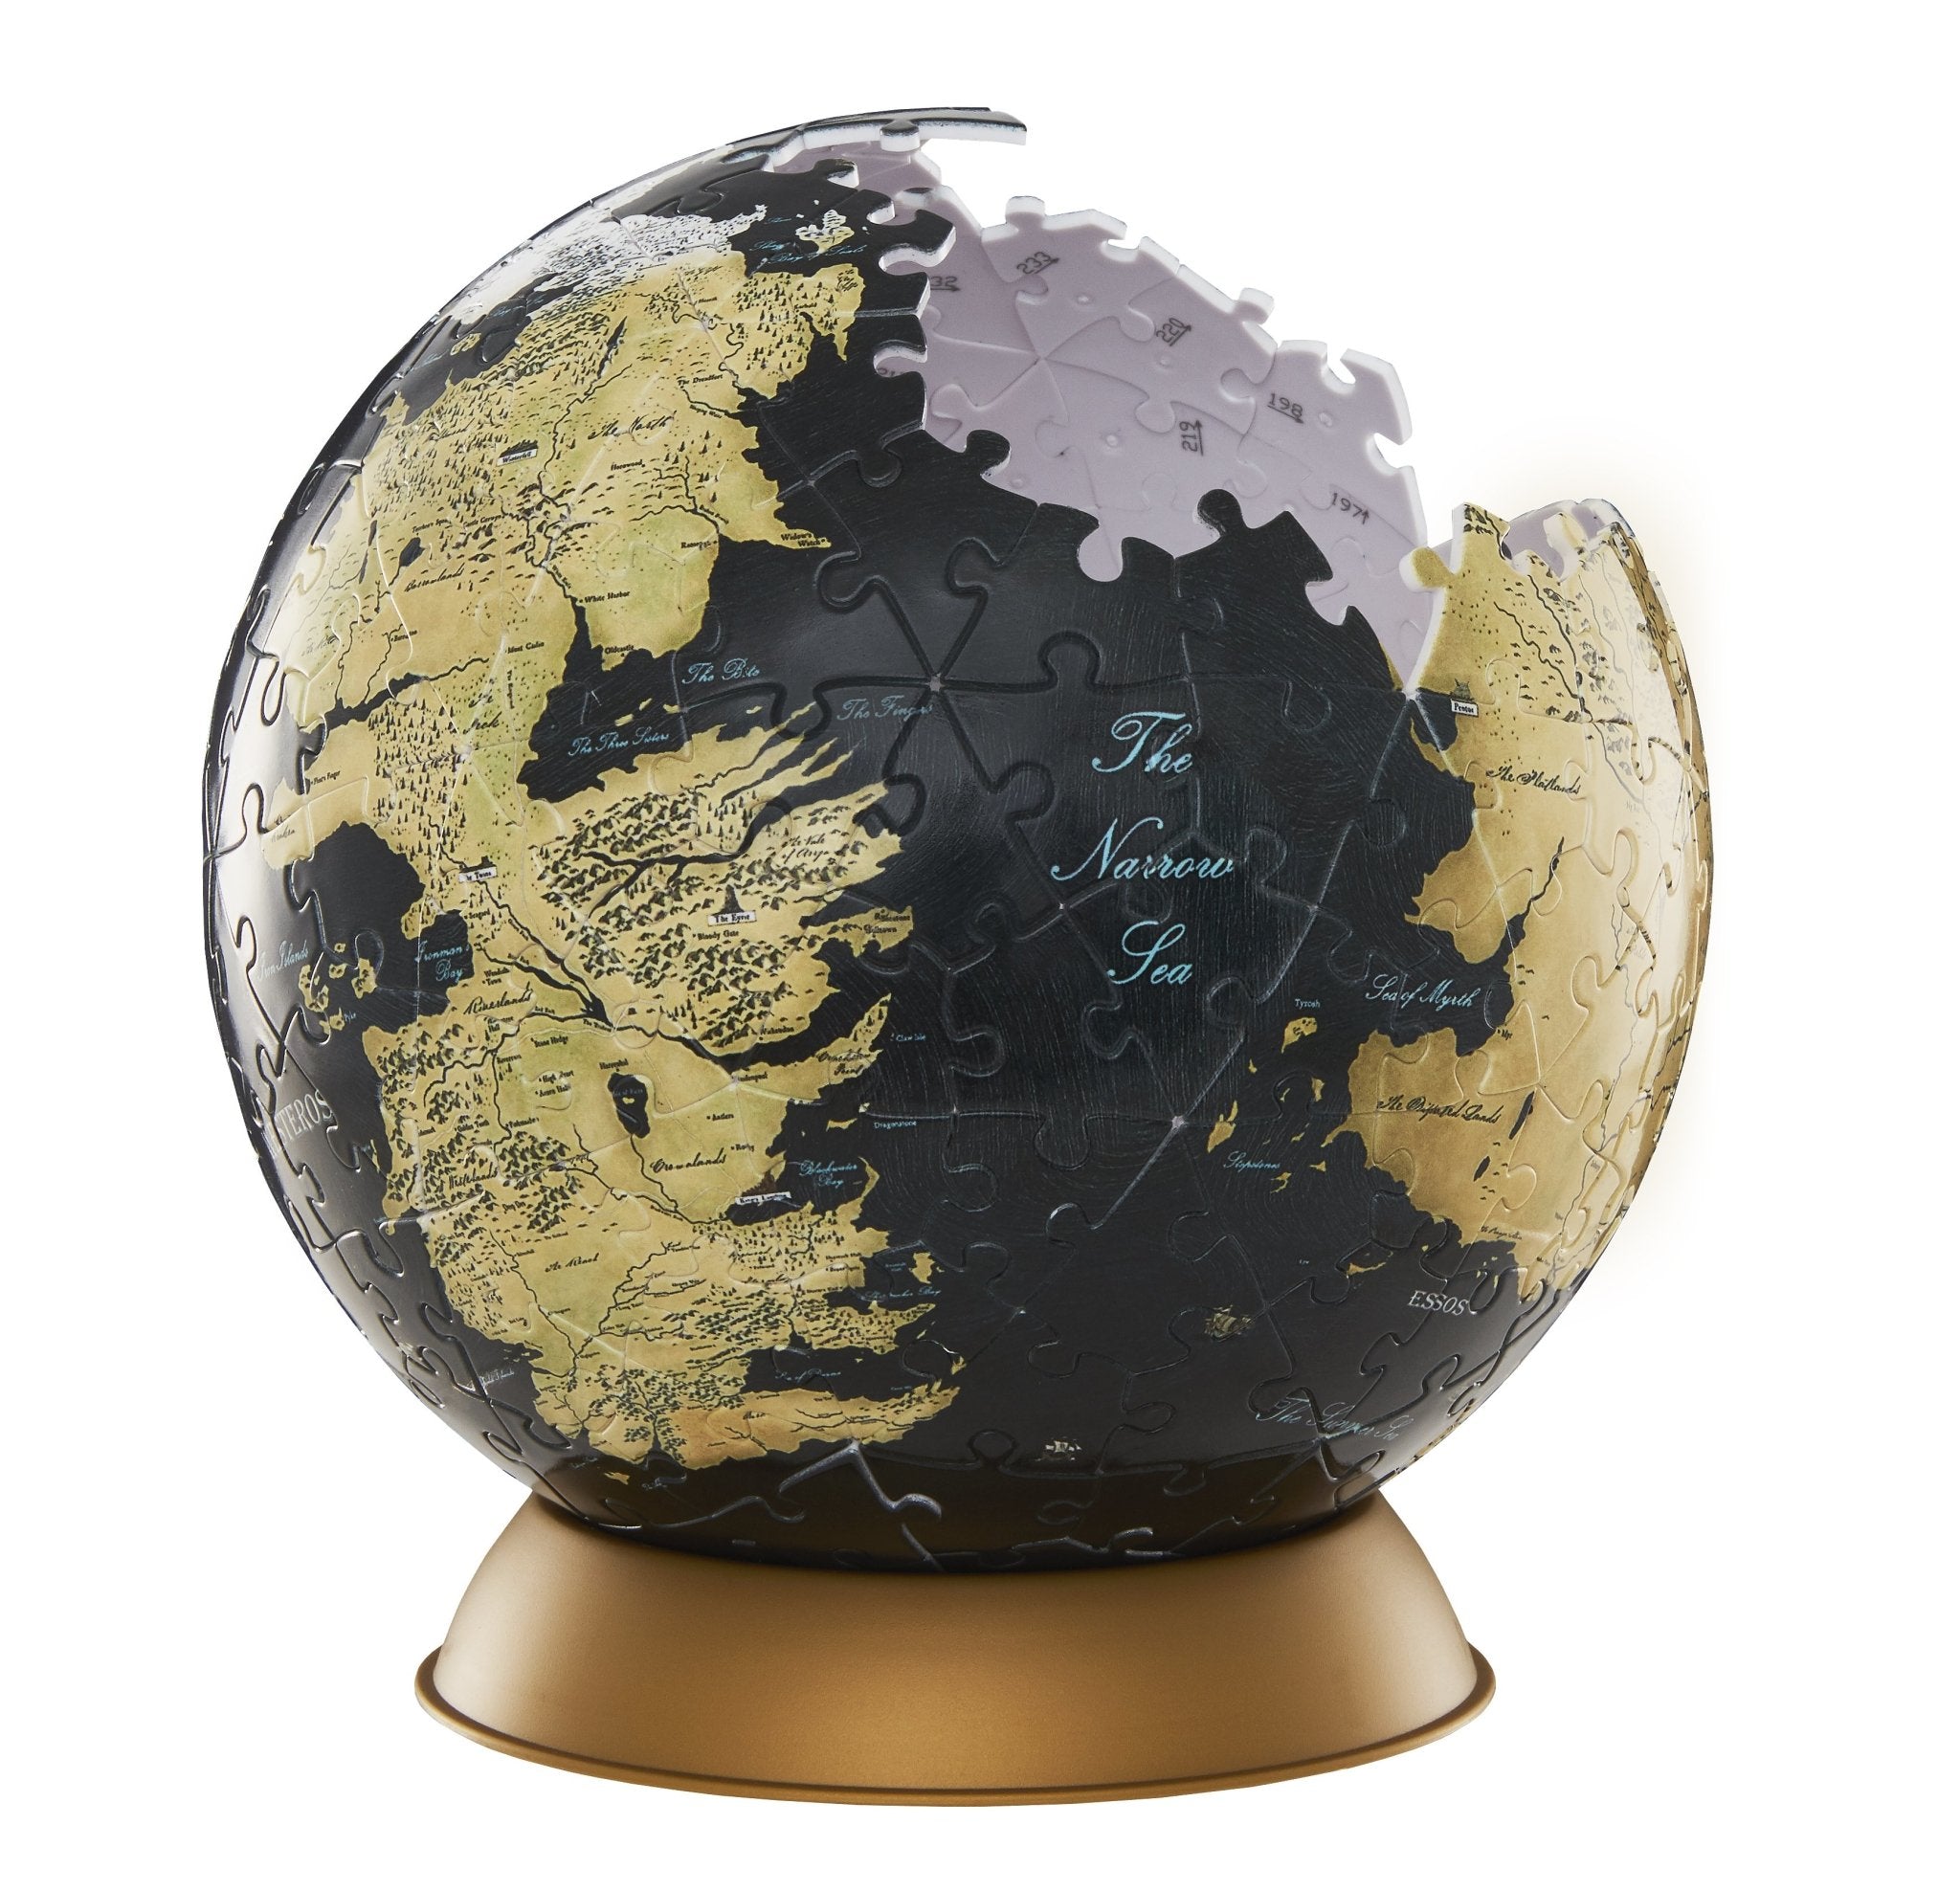 3D Game of Thrones World Globe Puzzle 6" - 4DPuzz - 4DPuzz
